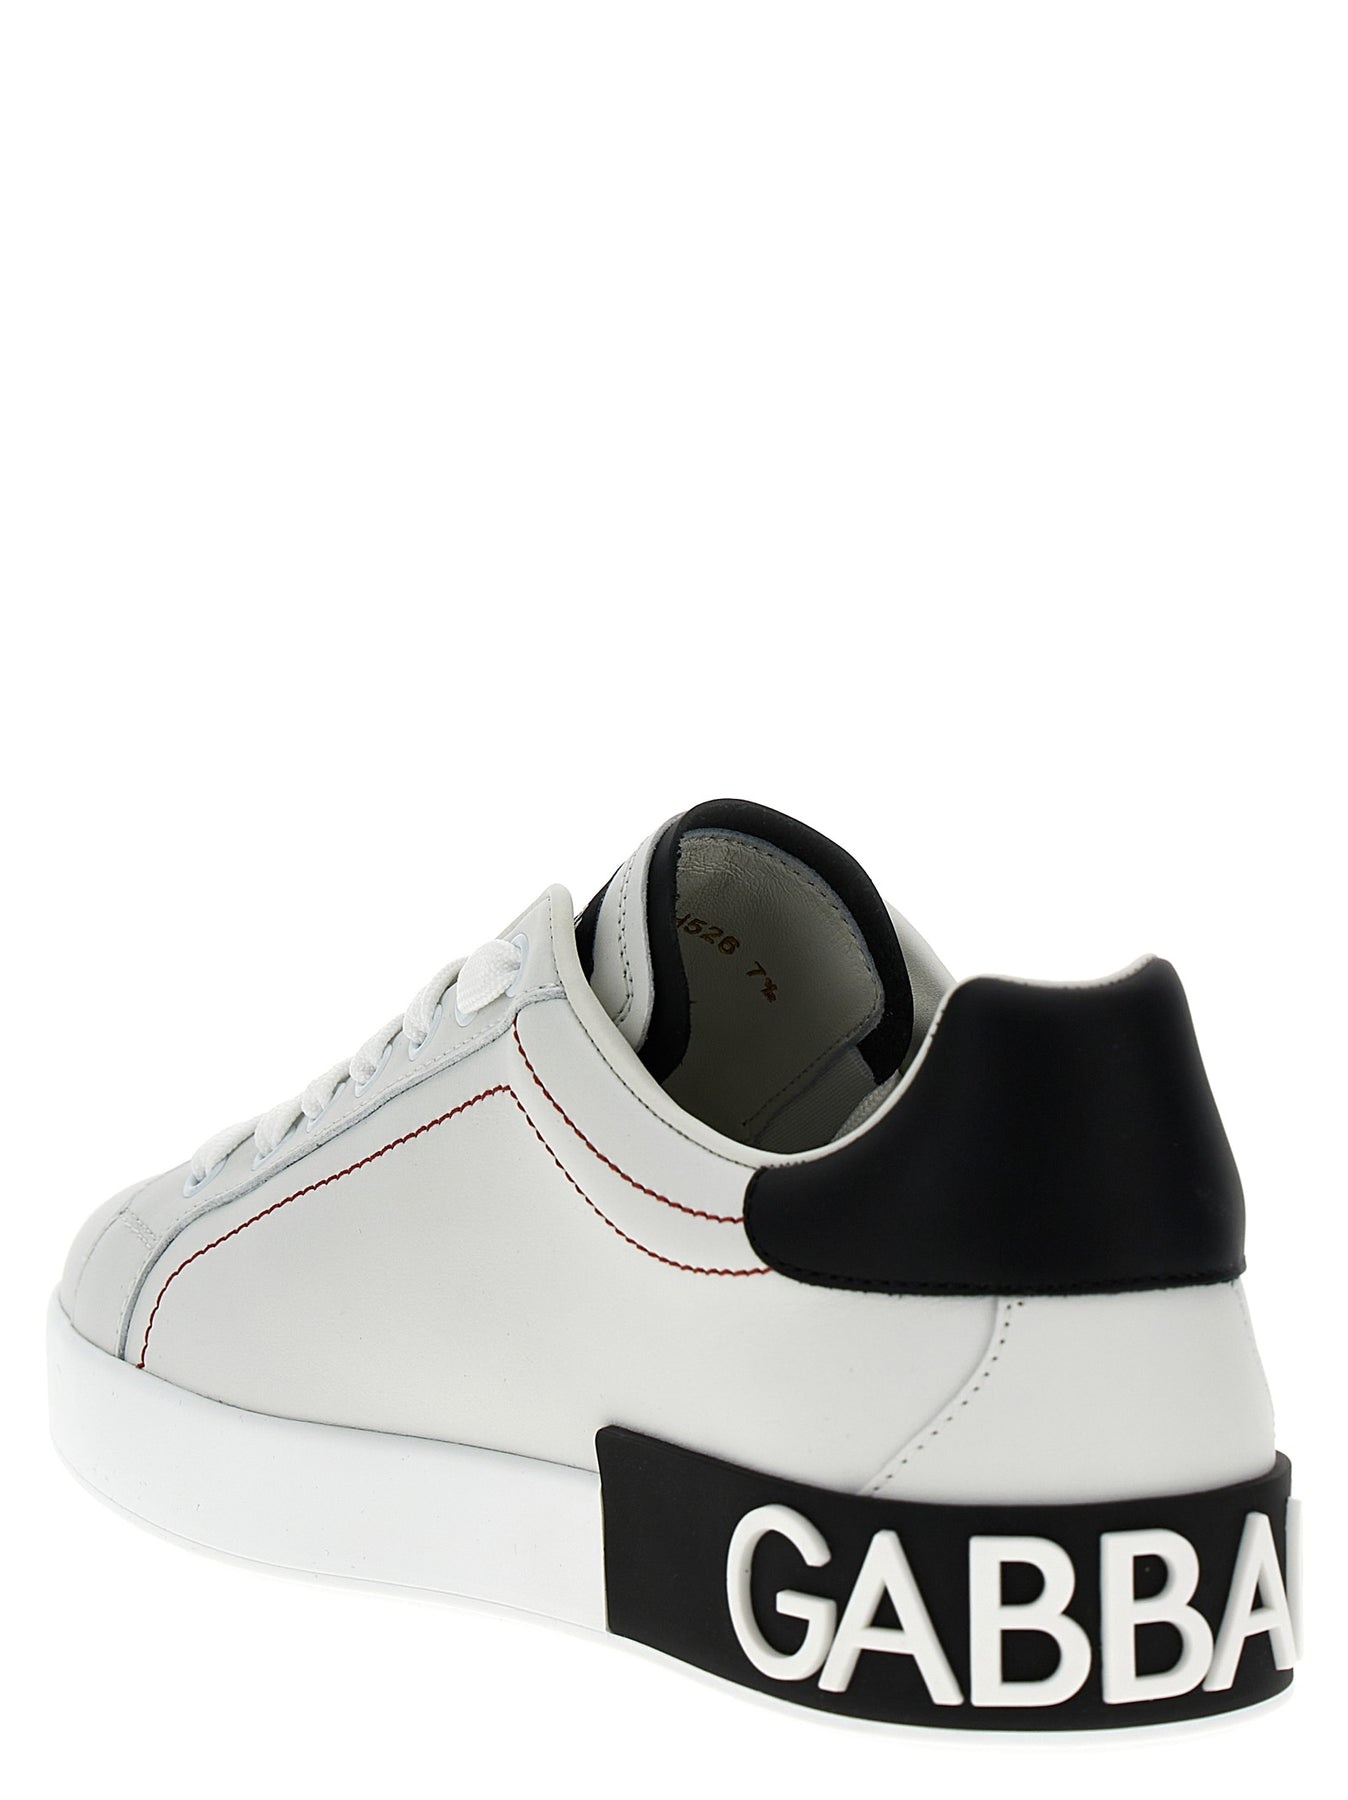 Portofino Sneakers White/Black - 3